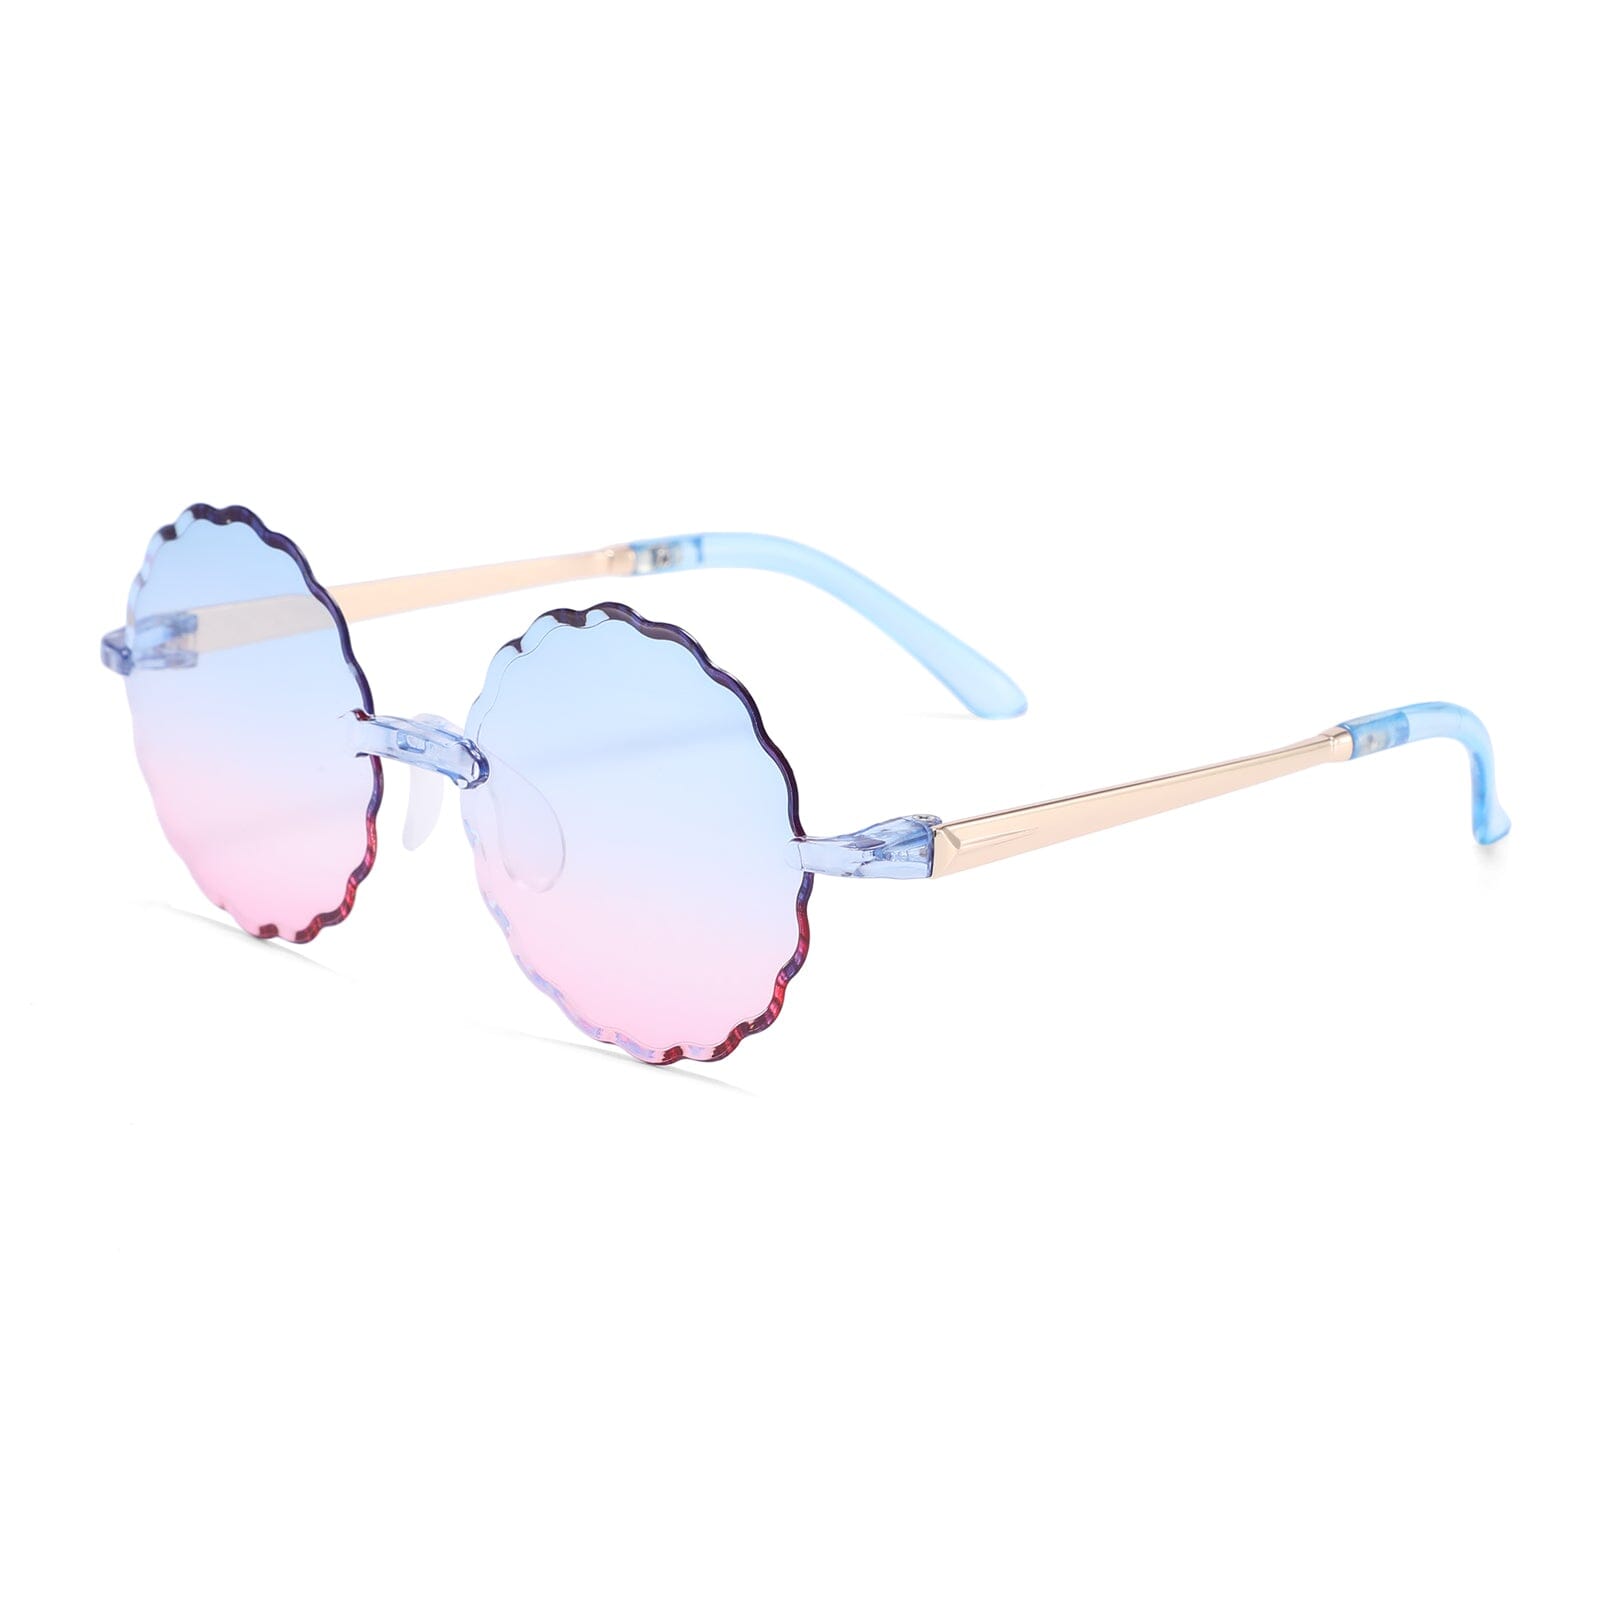 Scallop Sunglasses (Pink/Blue)